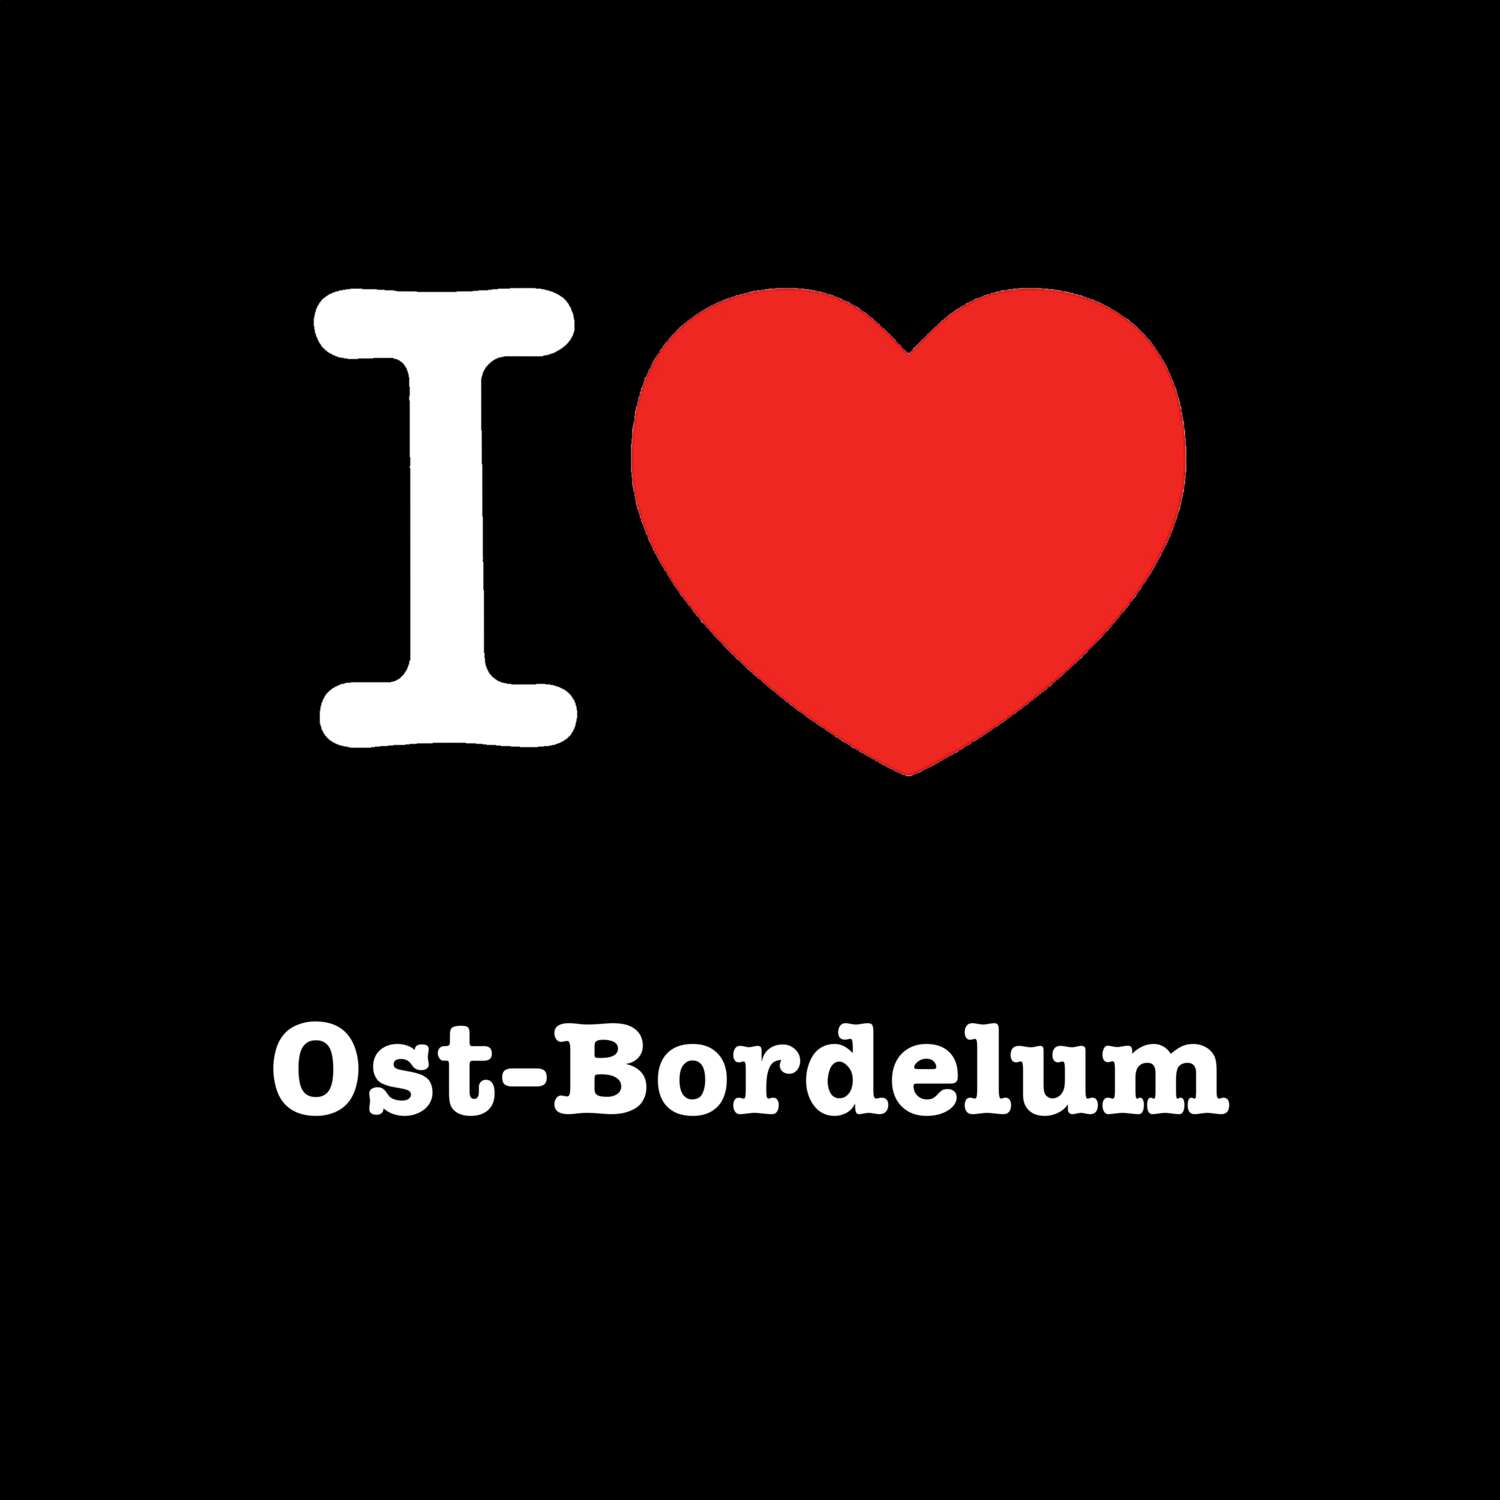 Ost-Bordelum T-Shirt »I love«